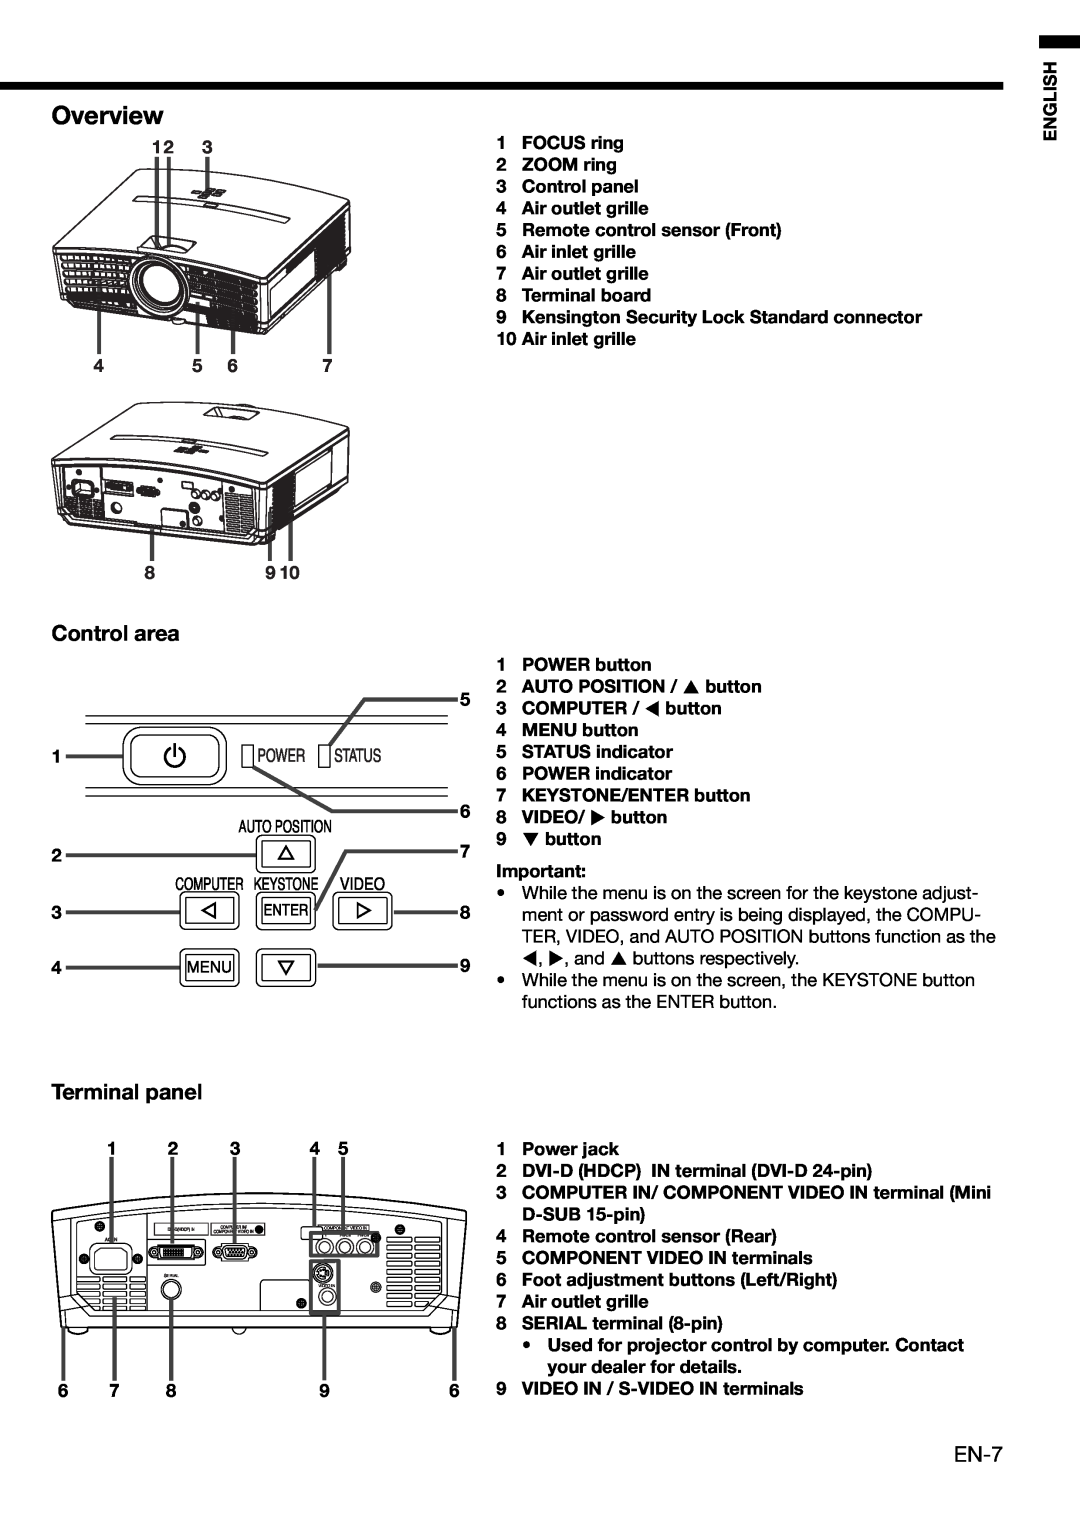 Mitsubishi Electronics HC910 Overview, Control area, Terminal panel, English, button, 1 2 3 4, SERIAL terminal 8-pin 